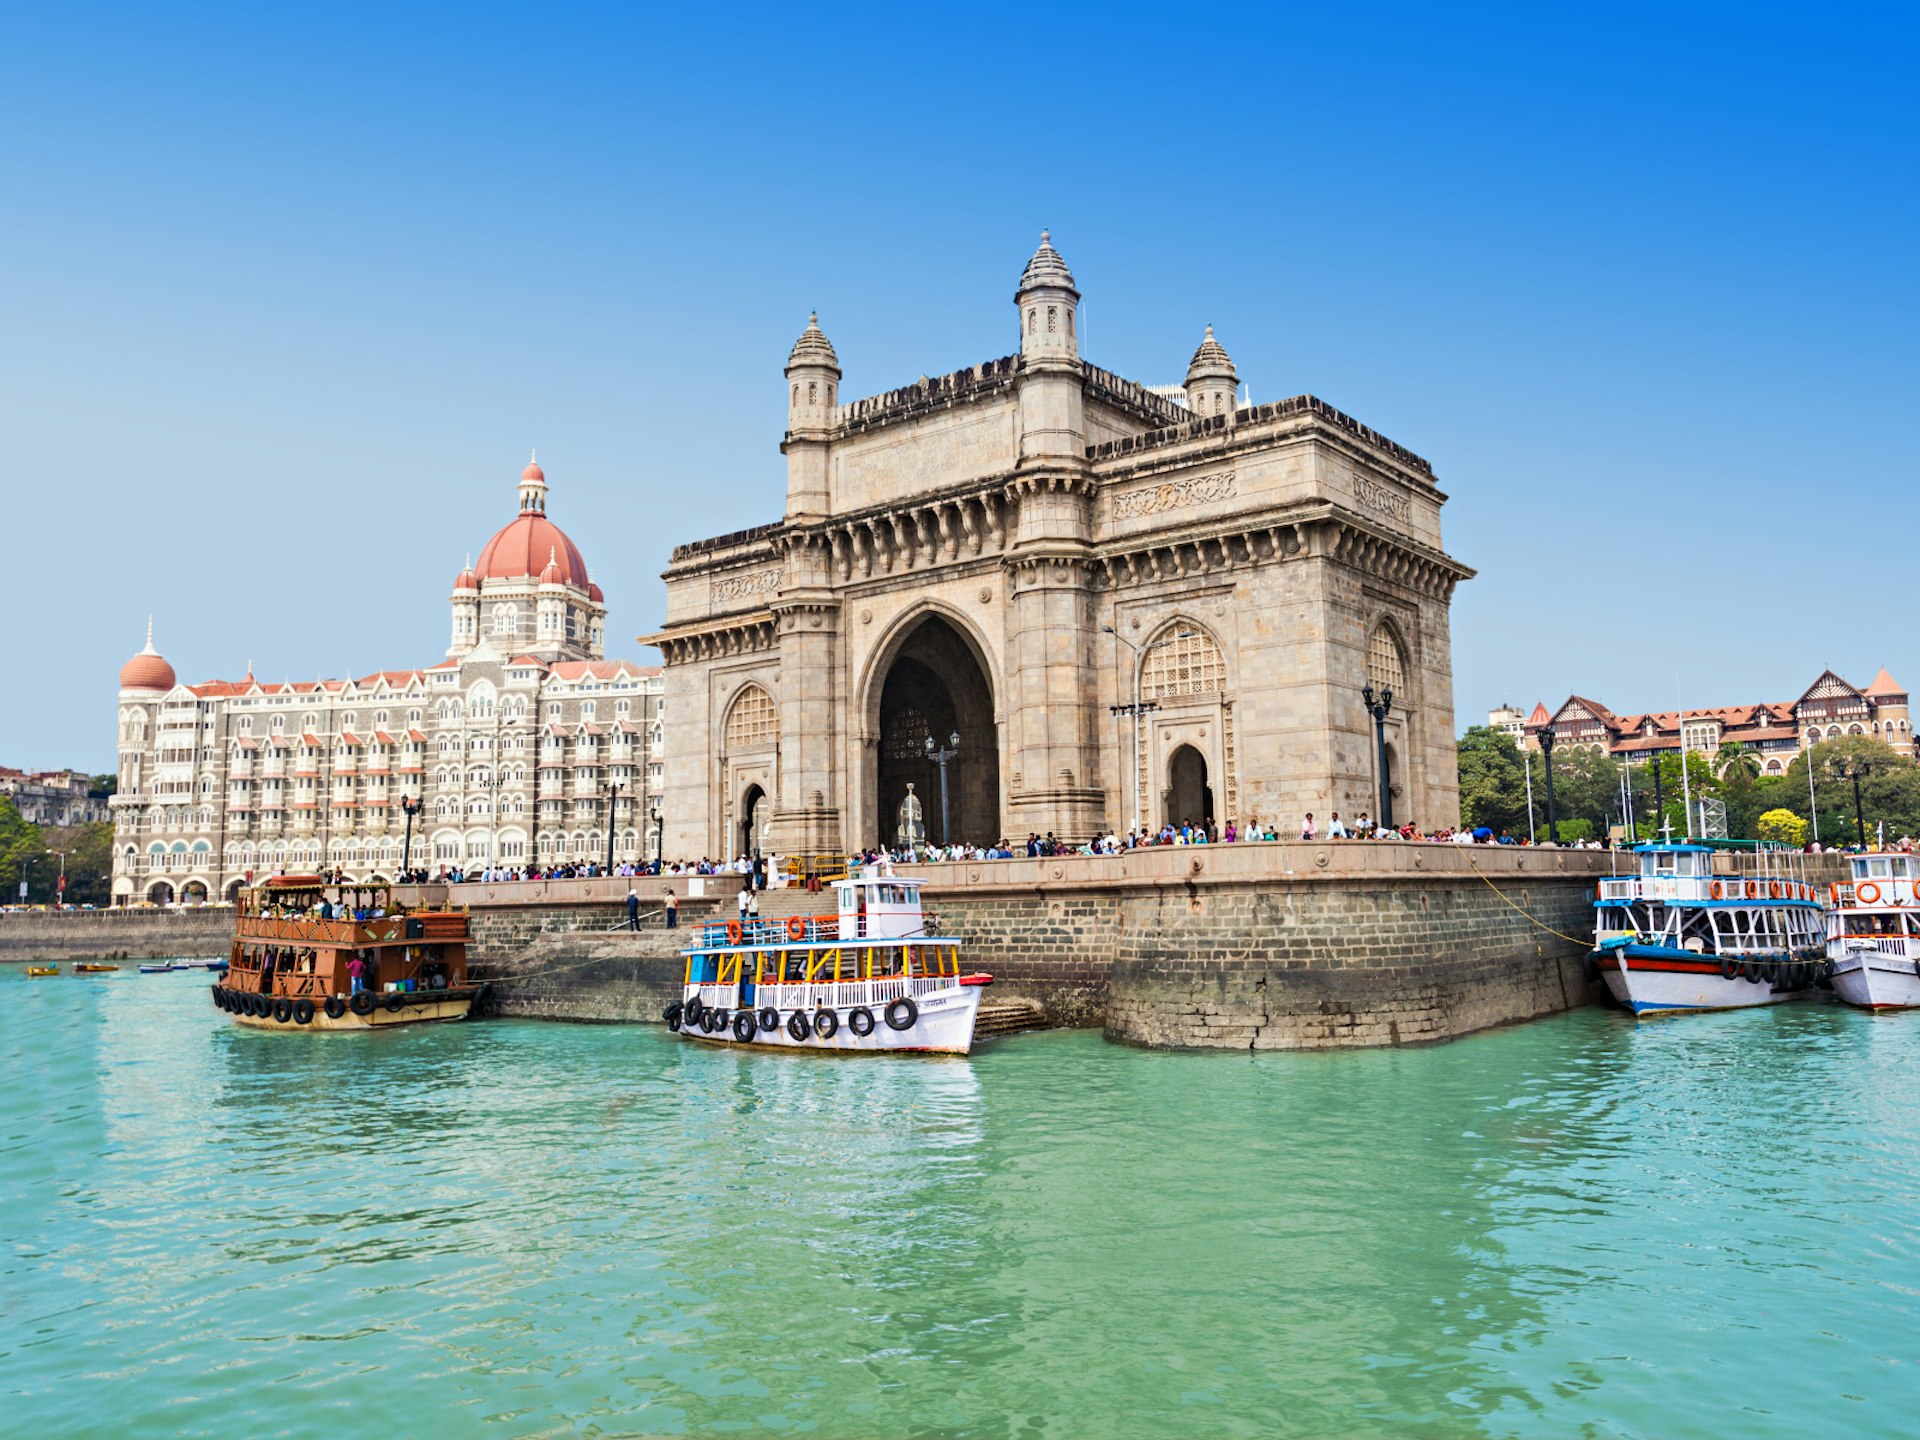 The Taj Mahal Palace Hotel and Gateway of India in Mumbai © saiko3p / Shutterstock